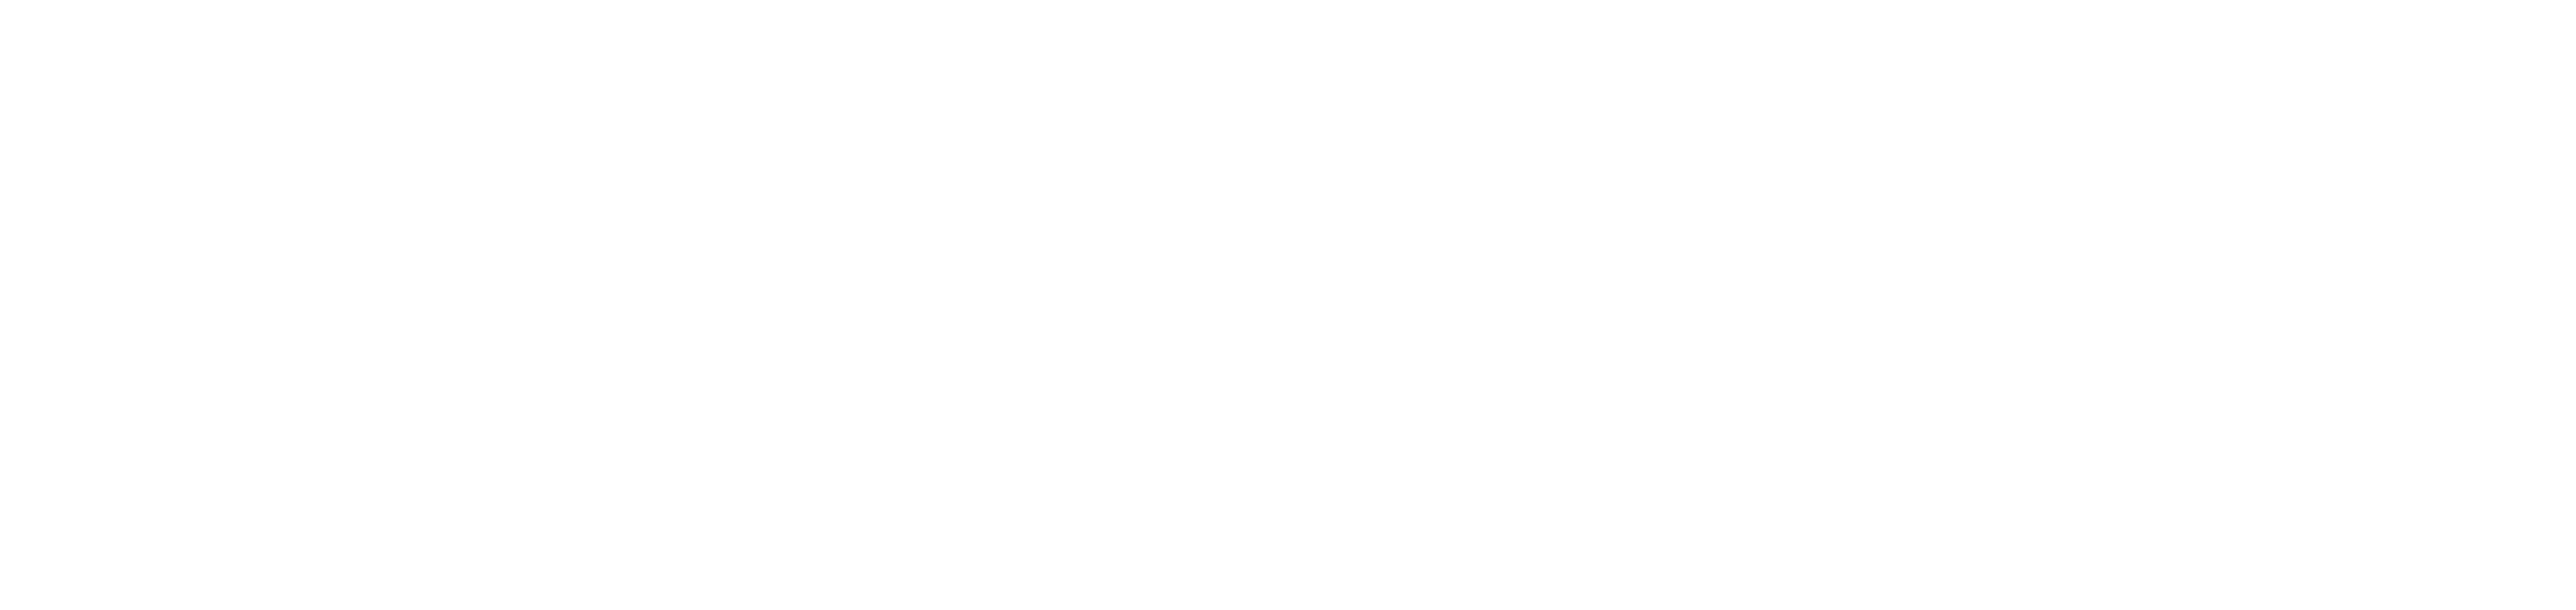 FocusCreative Solutions Logo for Digital Marketing Agency